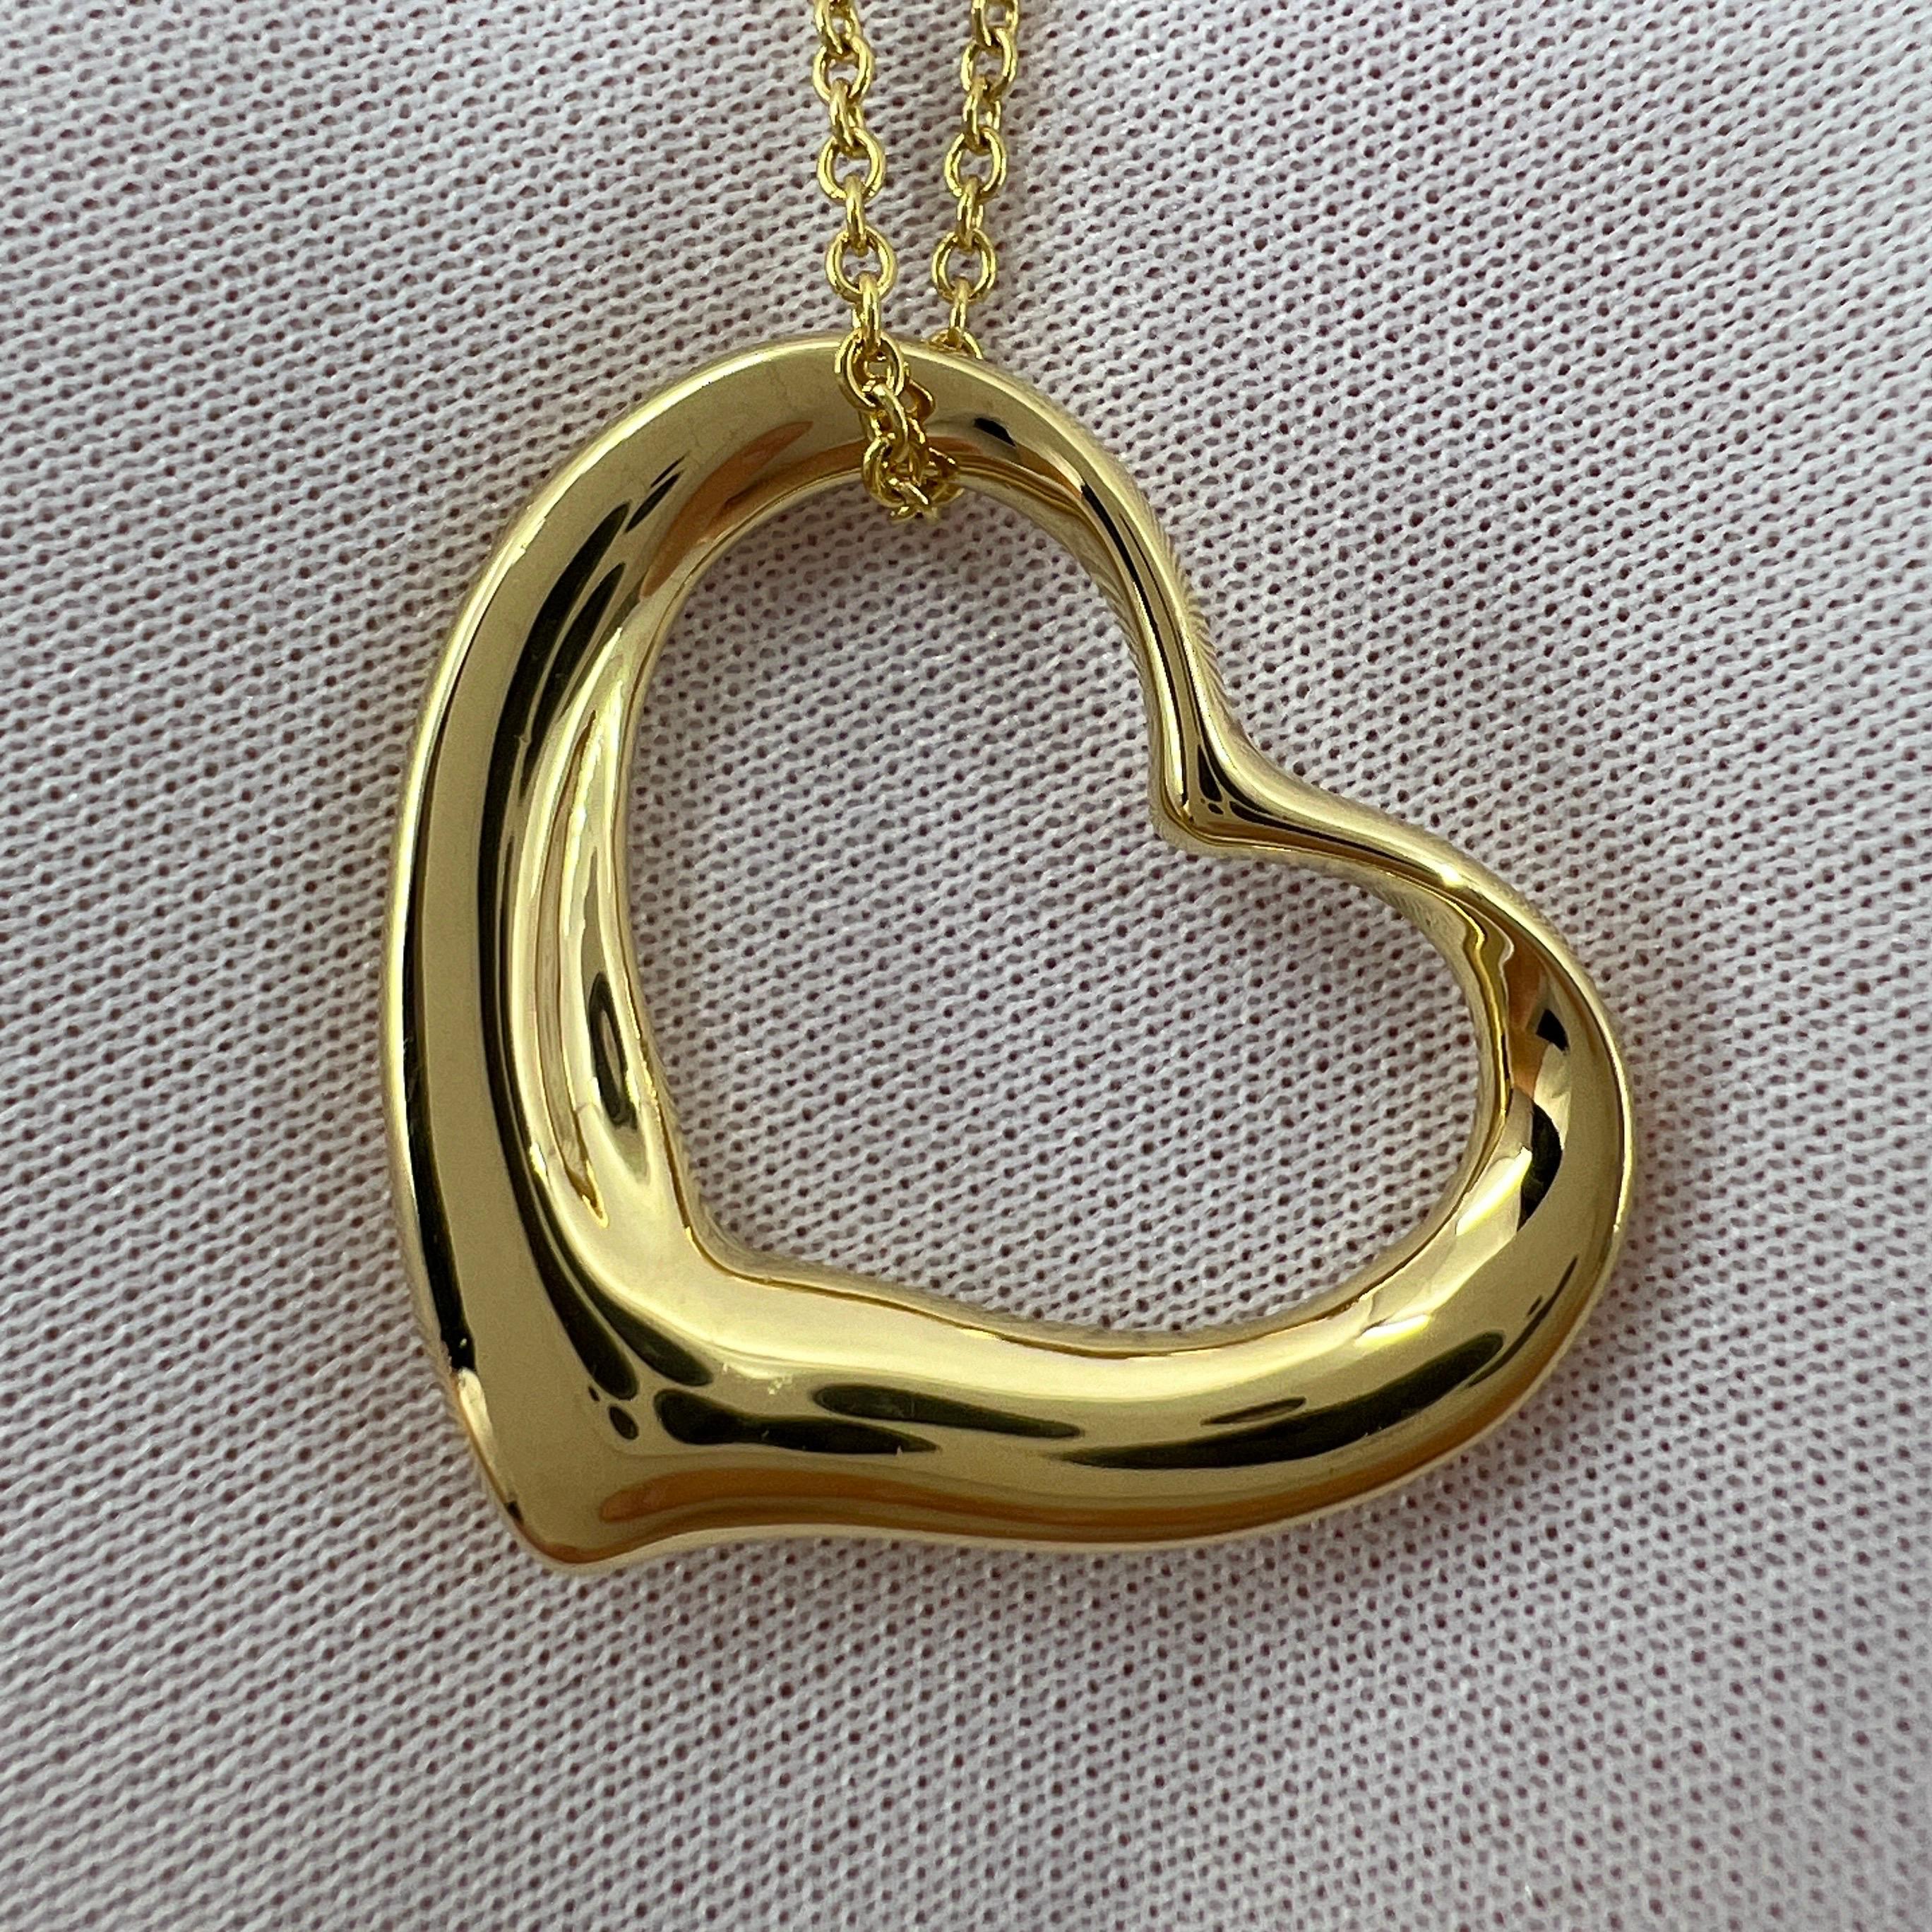 Tiffany & Co. Elsa Peretti Extra Large Open Heart 18k Gold Pendant Necklace 2